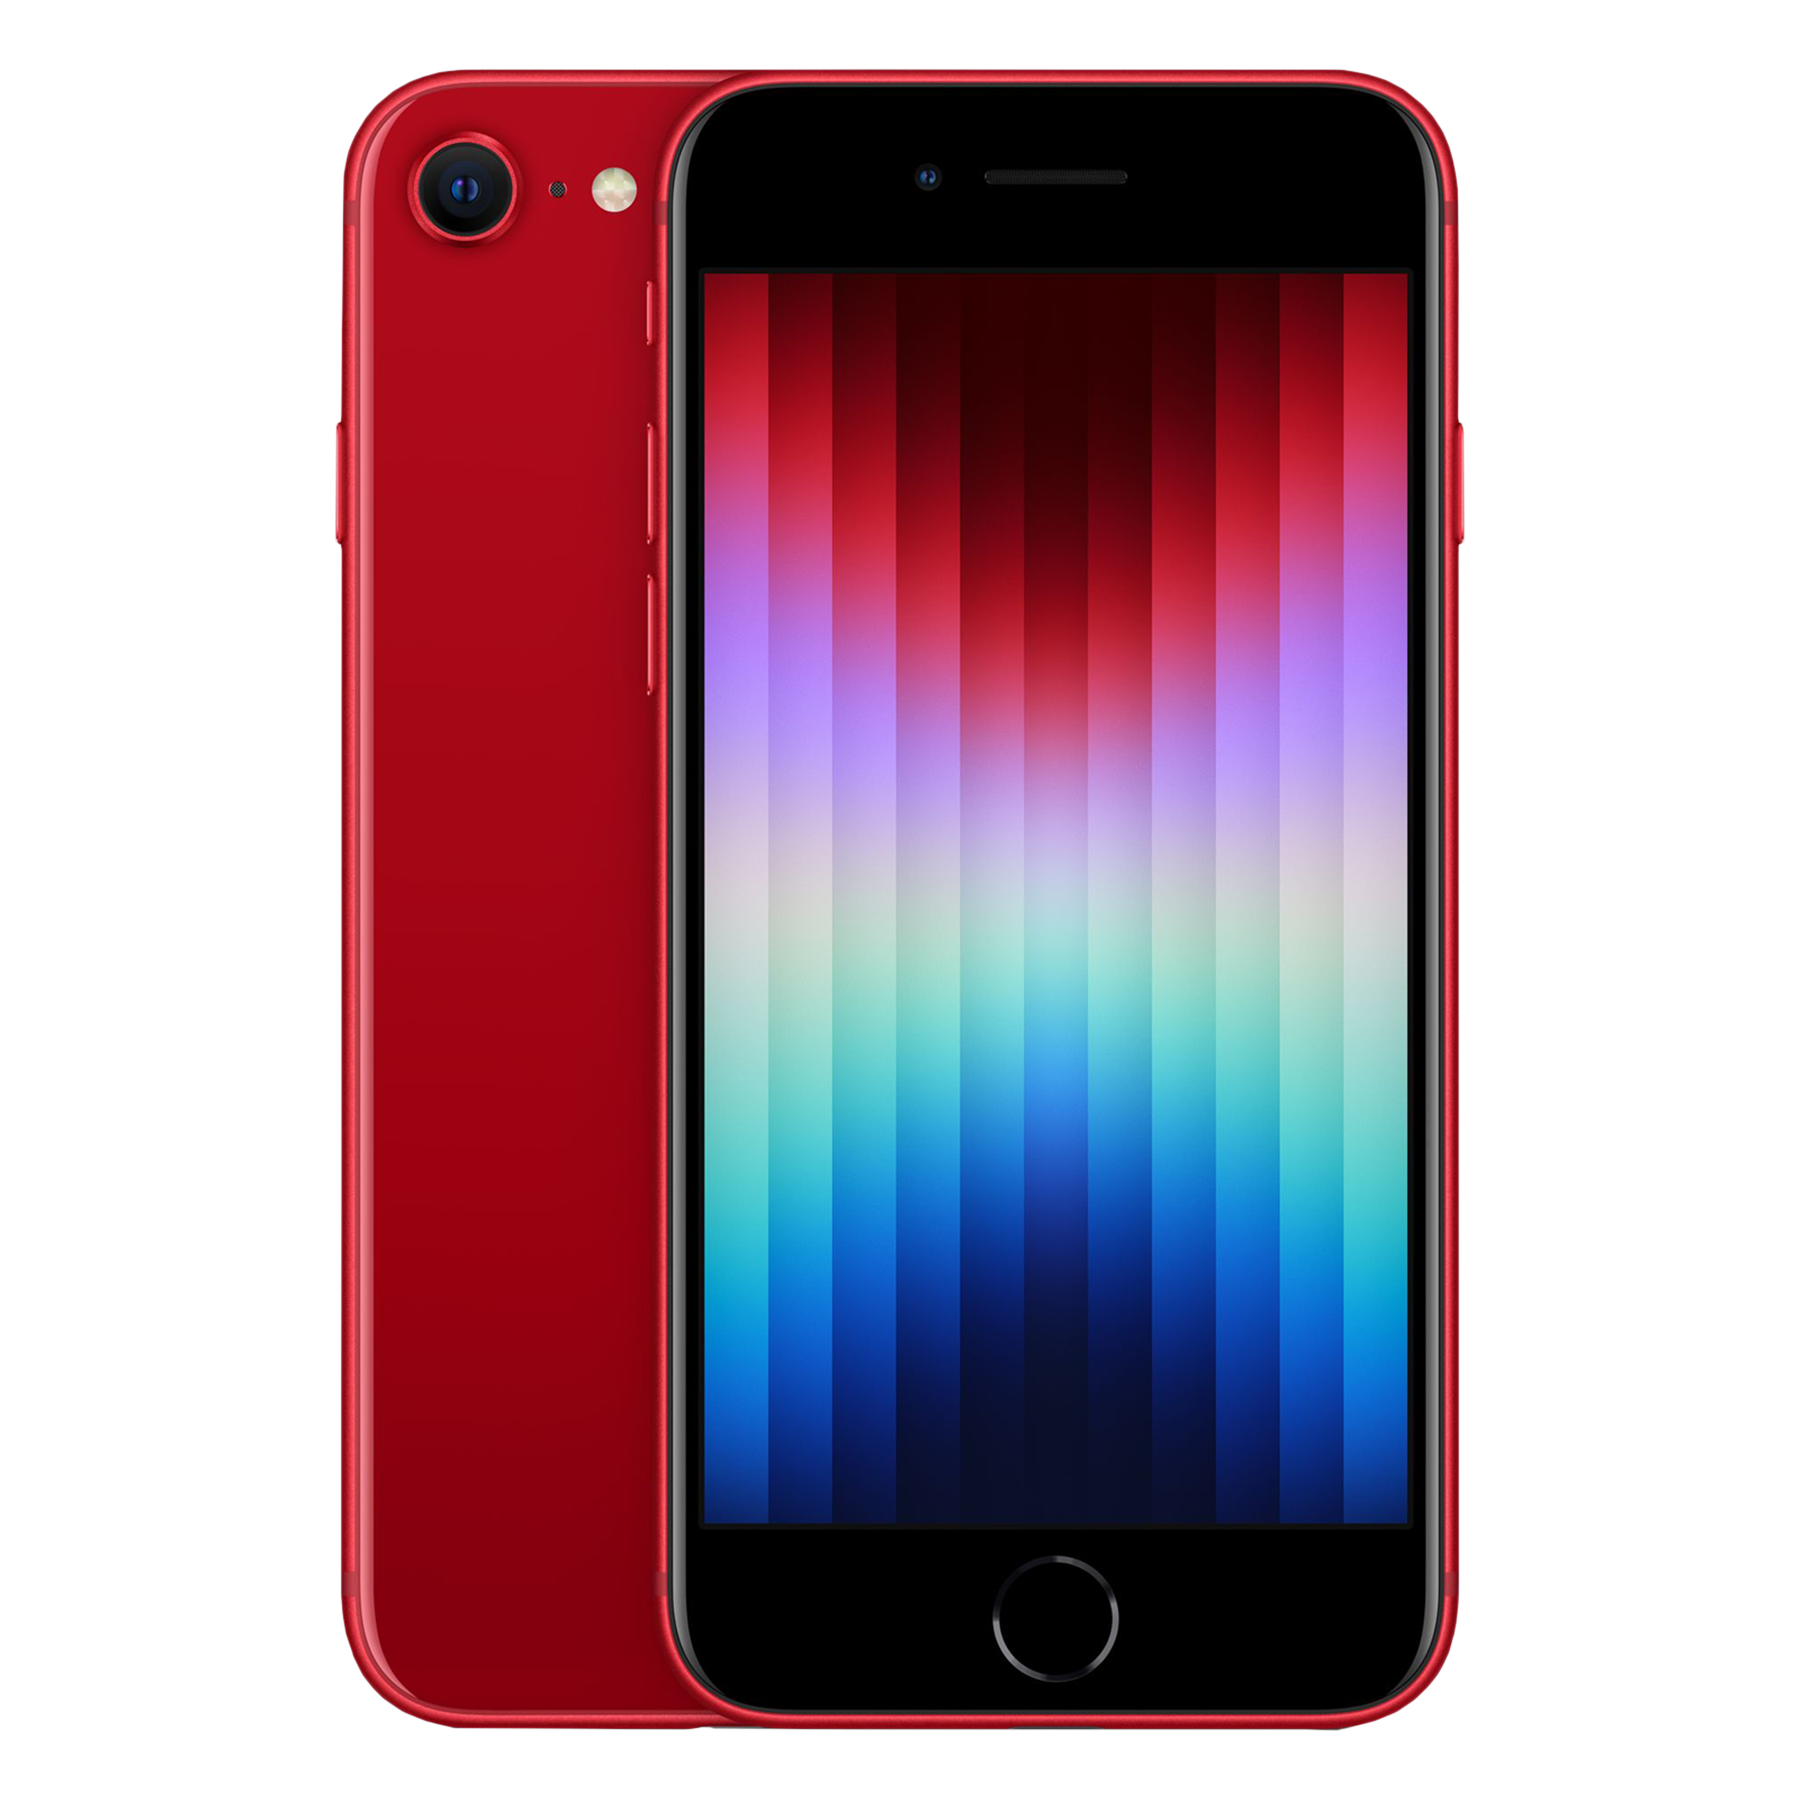 Apple iPhone SE 3rd Gen (64GB, Red)